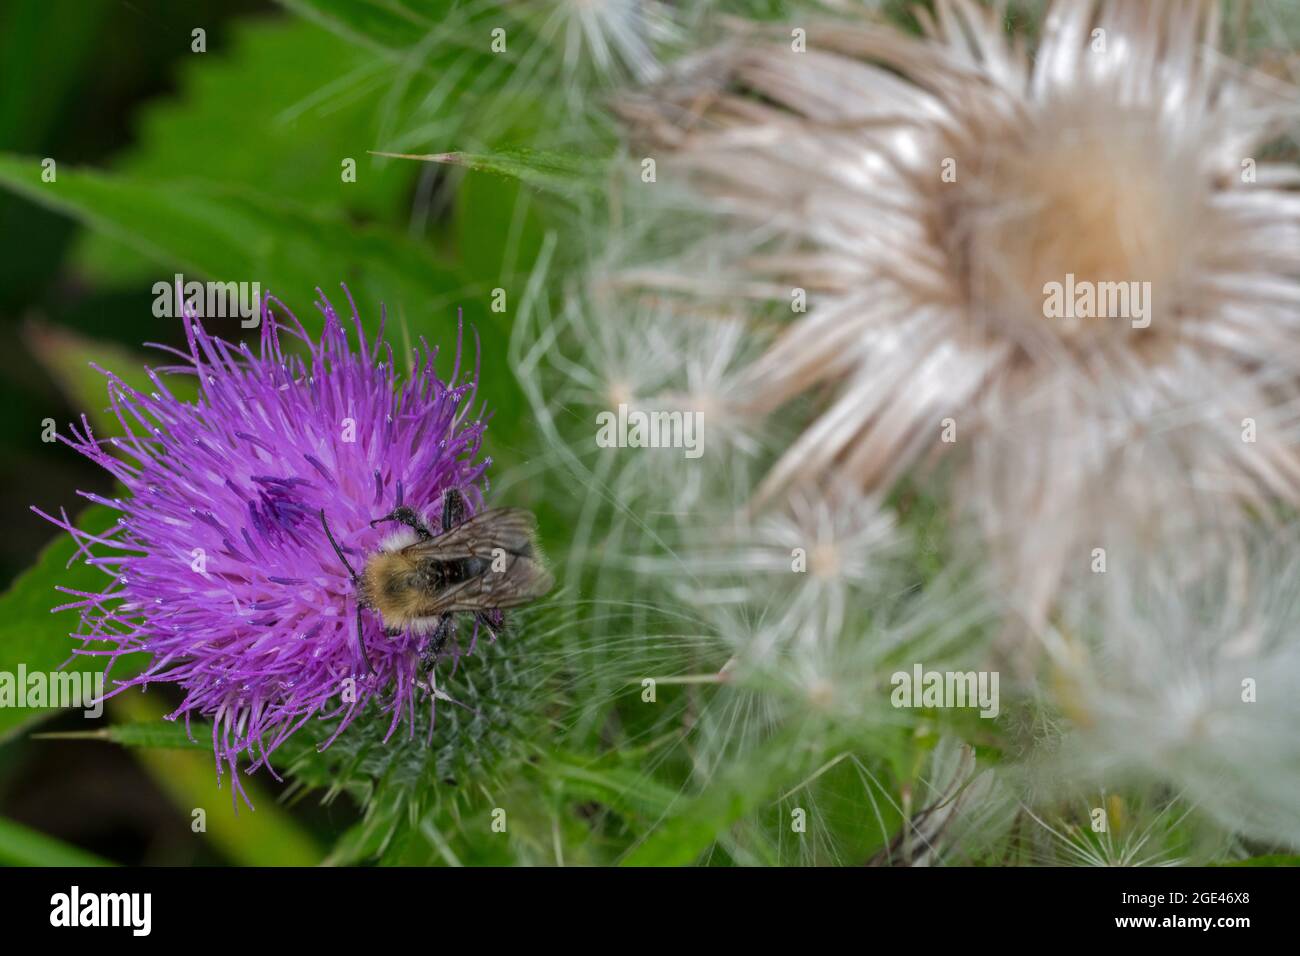 Bumblebee, seeds and seedhead / seed head of spear thistle / bull thistle / common thistle (Cirsium vulgare / Cirsium lanceolatum) in summer Stock Photo